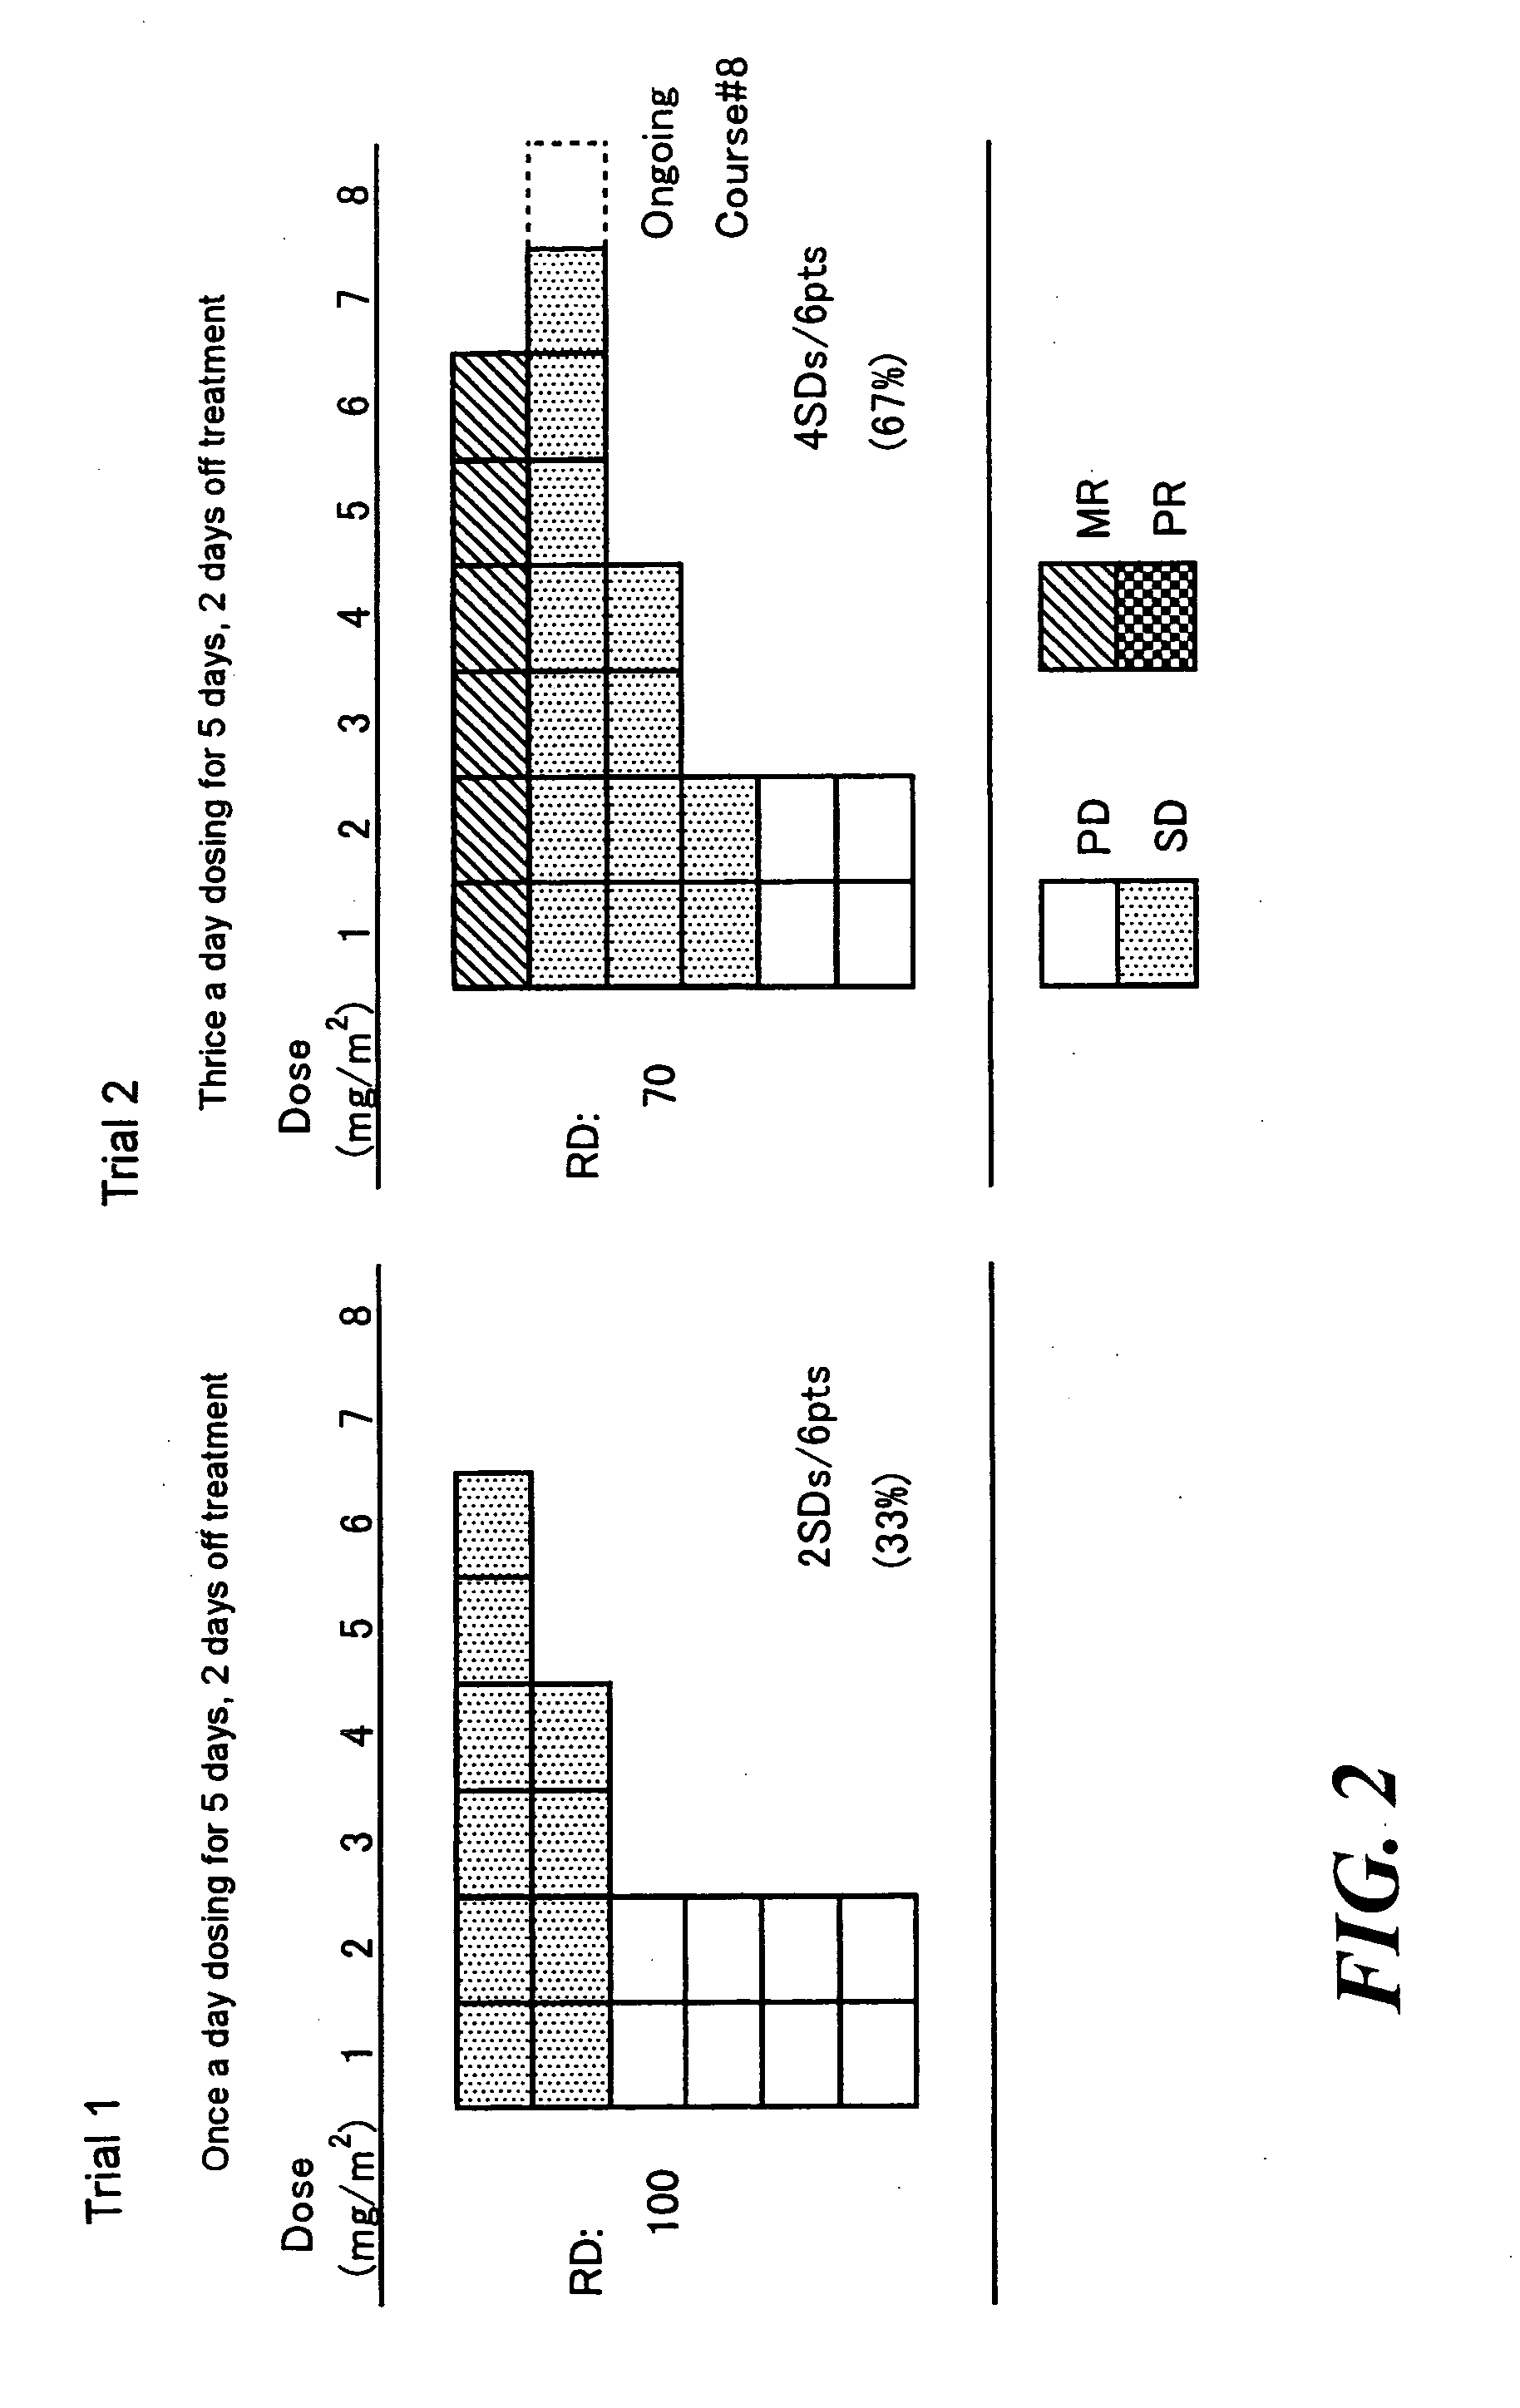 Method of administrating an anticancer drug containing alpha, alpha, alpha-trifluorothymidine and thymidine phosphorylase inhibitor